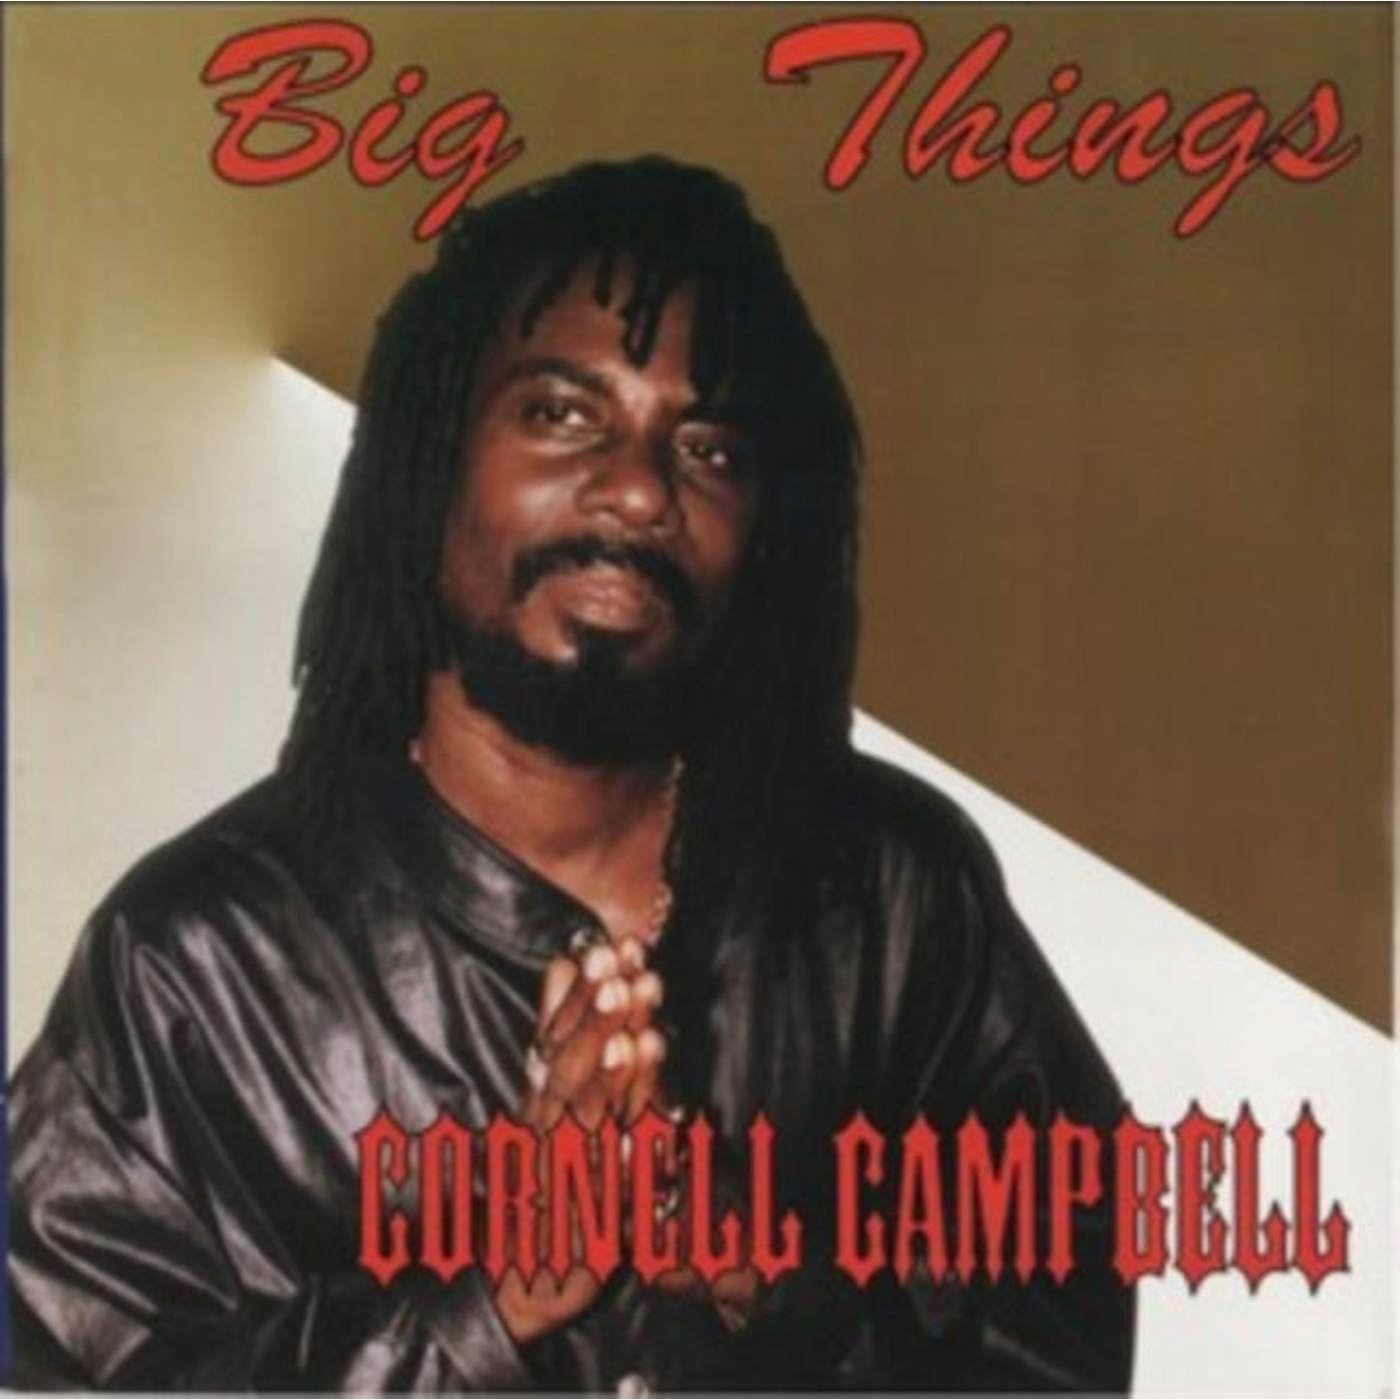 Cornell Campbell LP - Big Things (Vinyl)